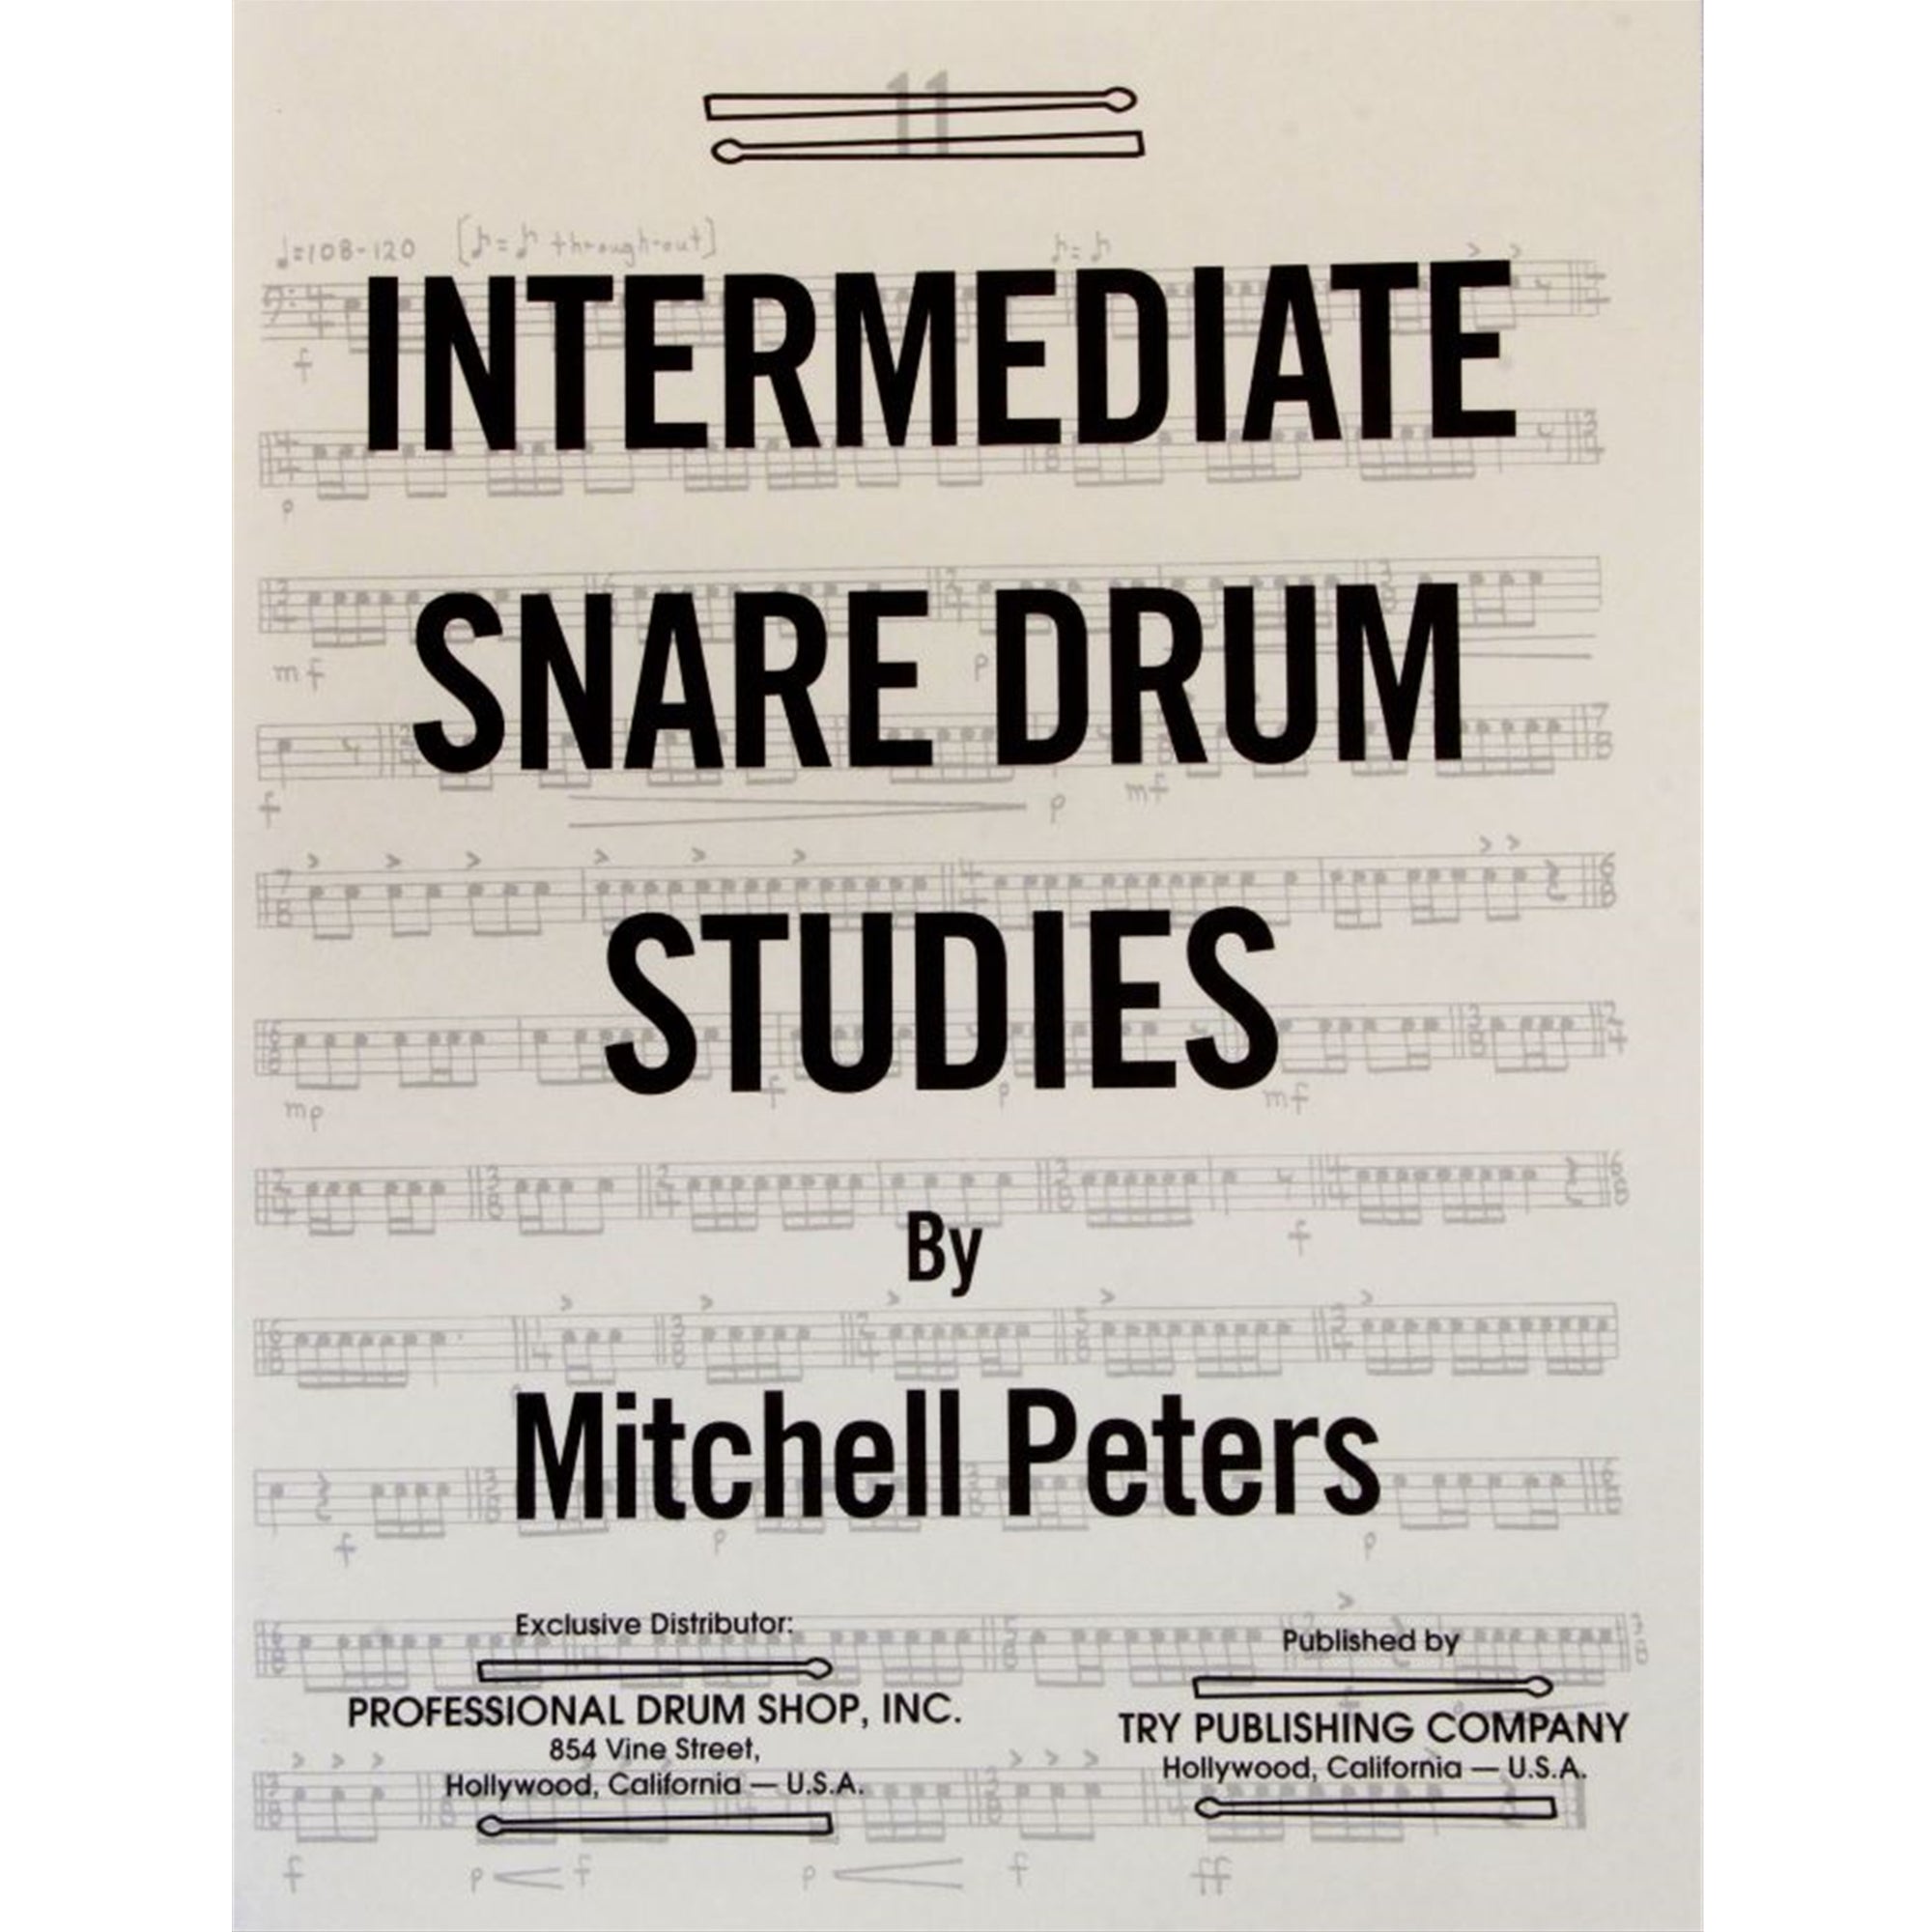 MITCHELL PETERS TRY1064 Intermediate Snare Drum Studies